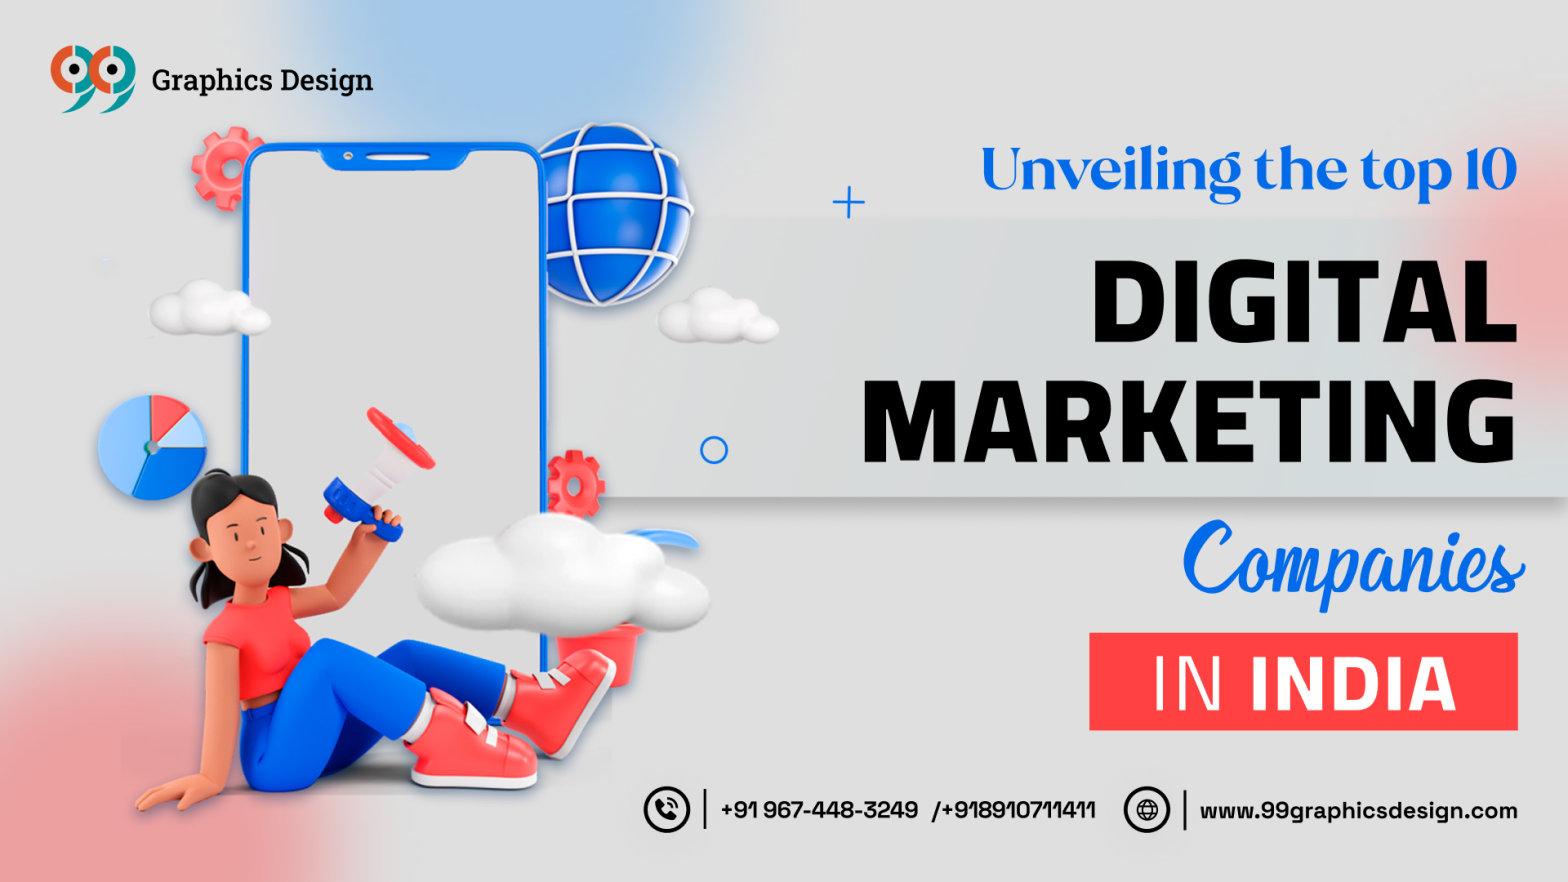 Digital marketing companies in India